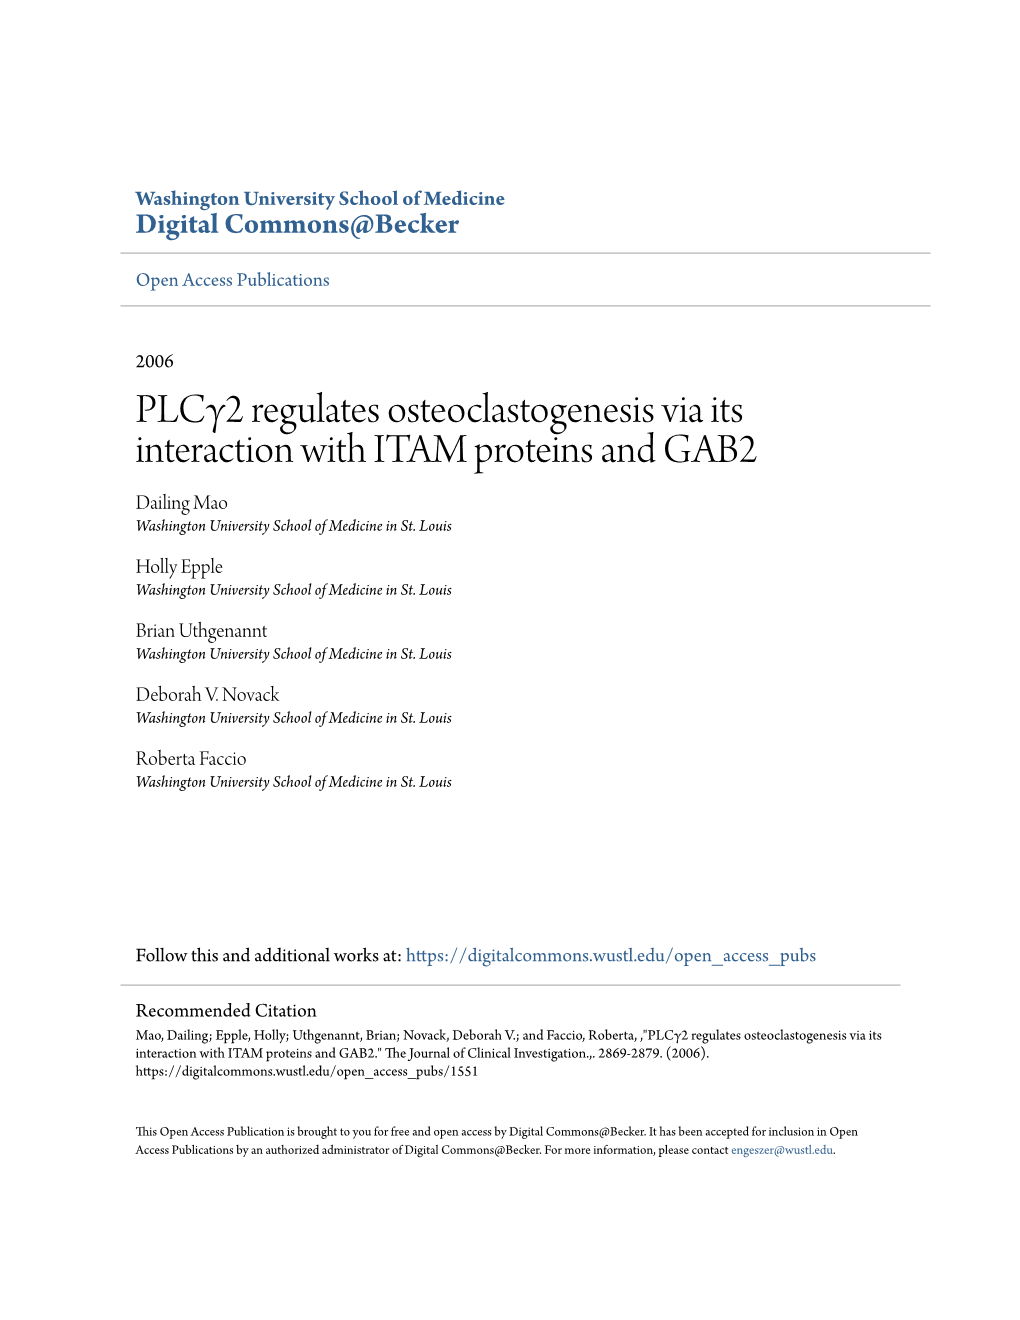 Plcγ2 Regulates Osteoclastogenesis Via Its Interaction with ITAM Proteins and GAB2 Dailing Mao Washington University School of Medicine in St